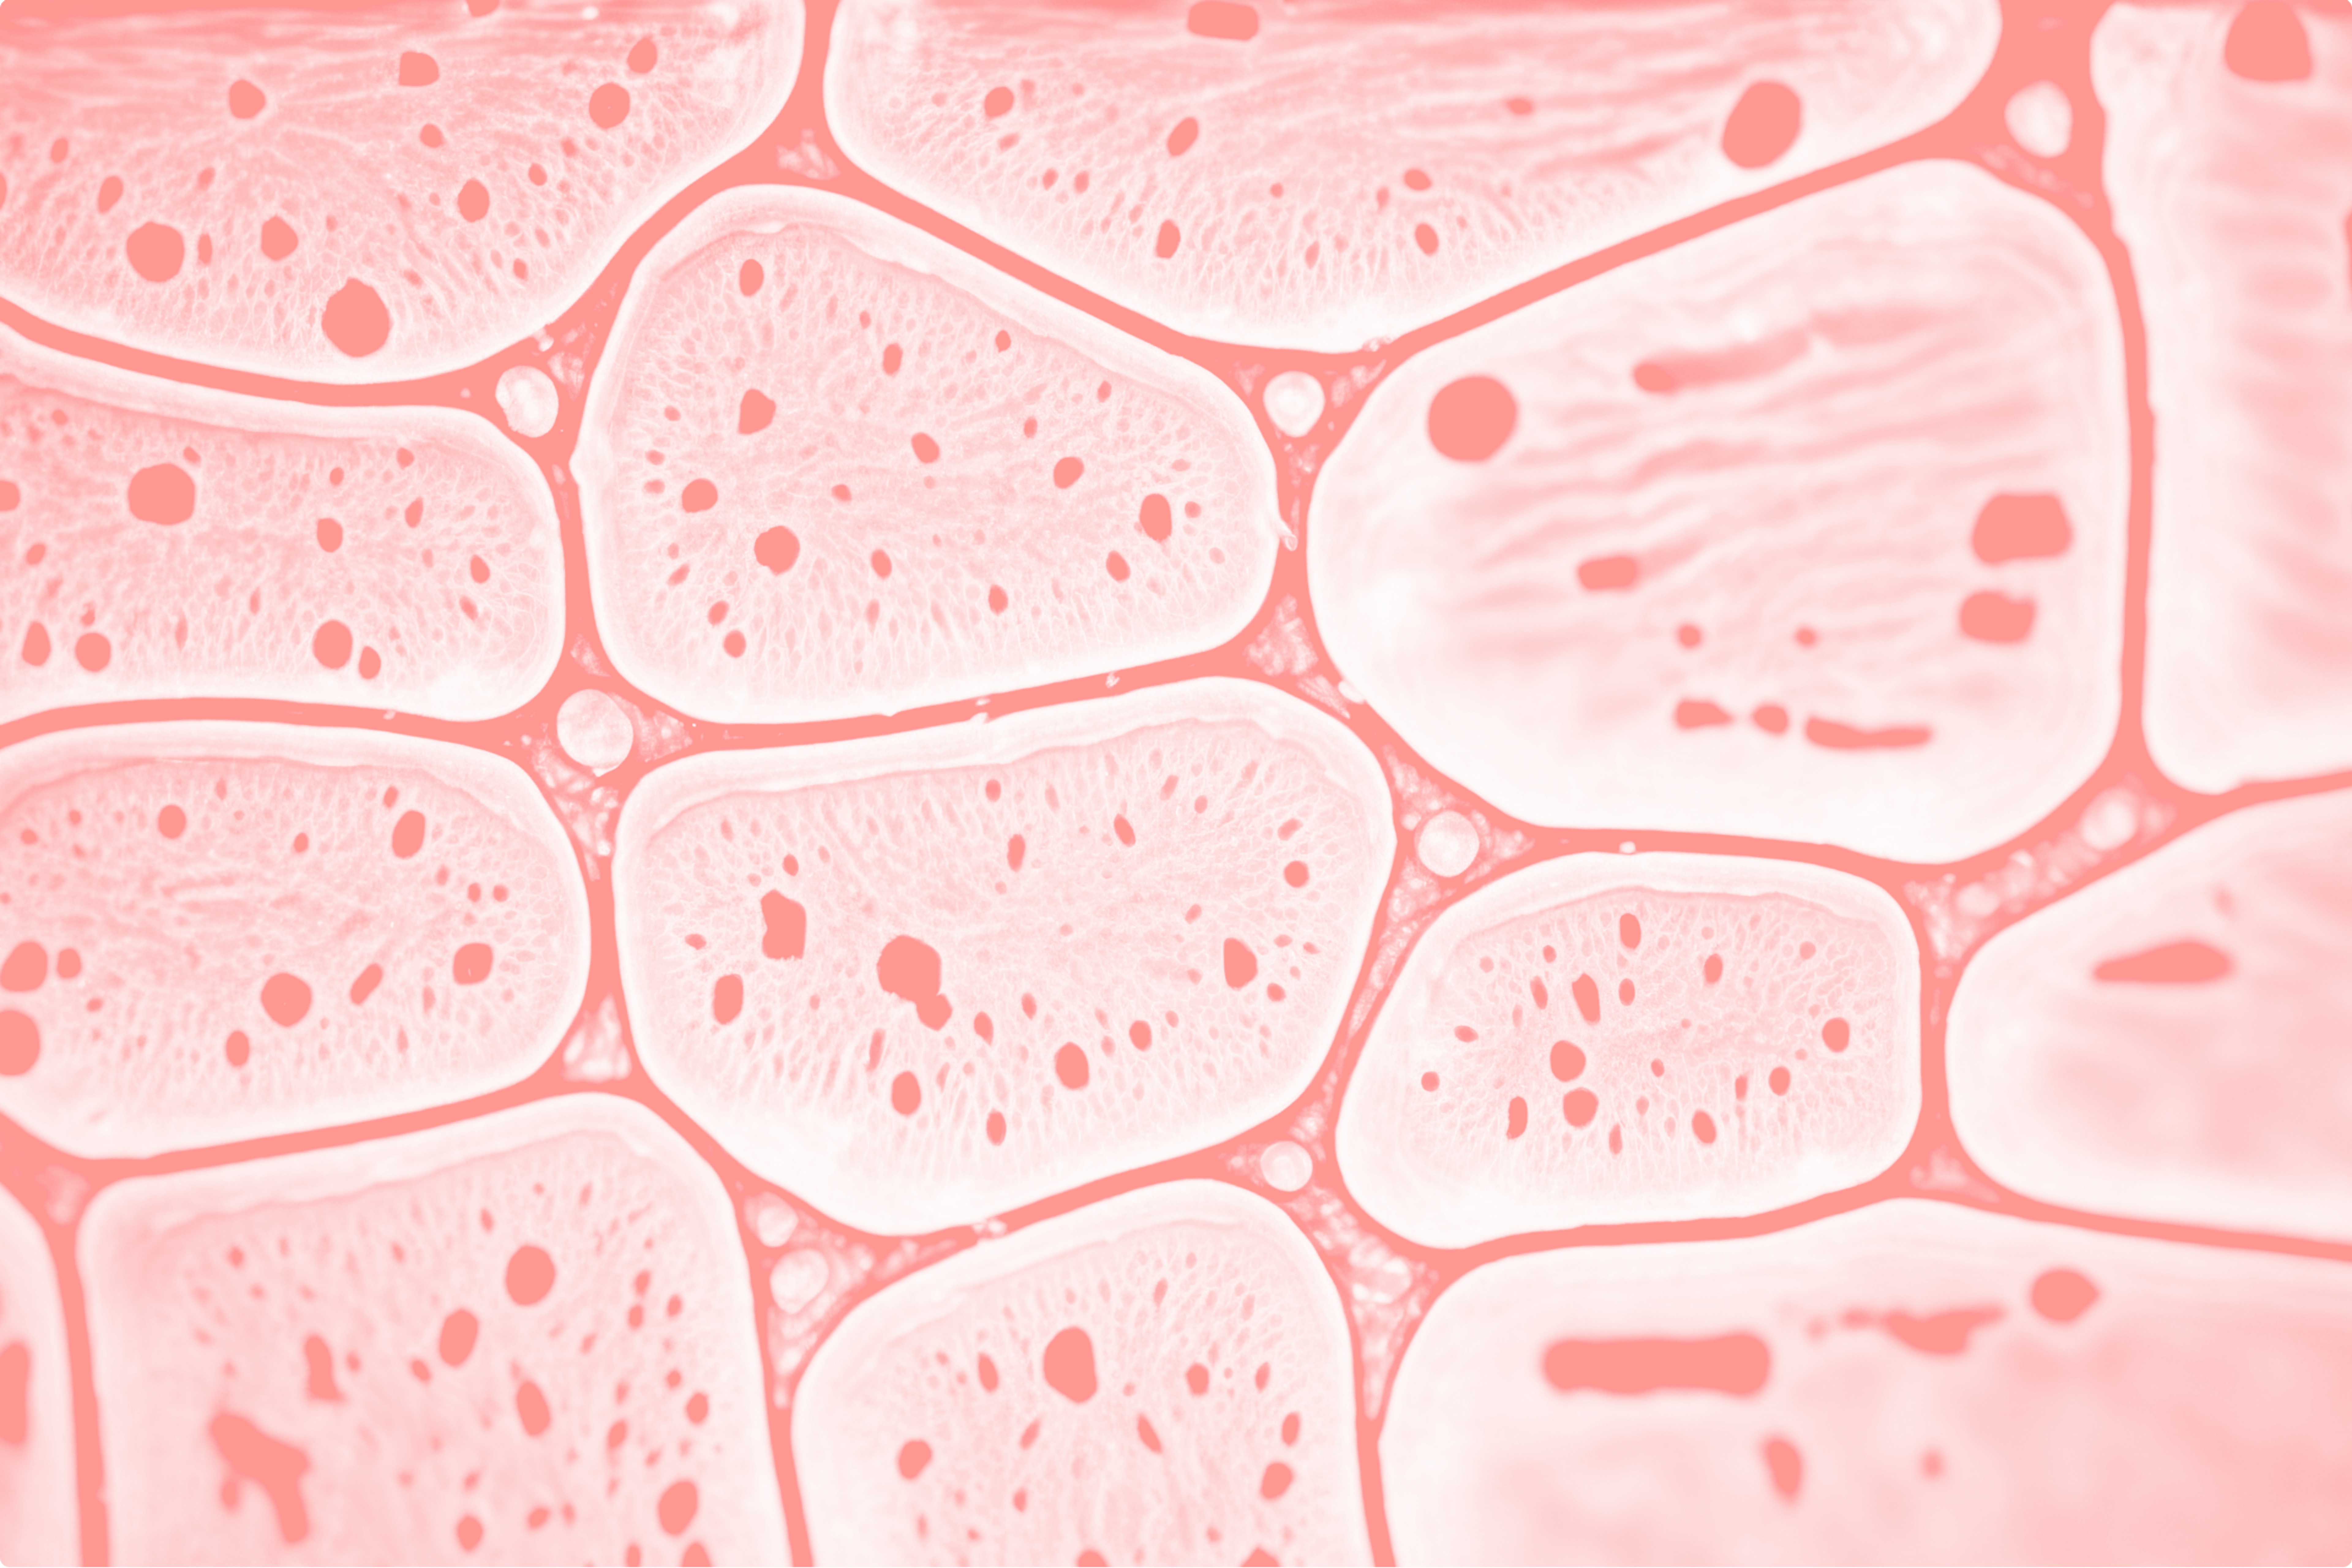 Skin cells